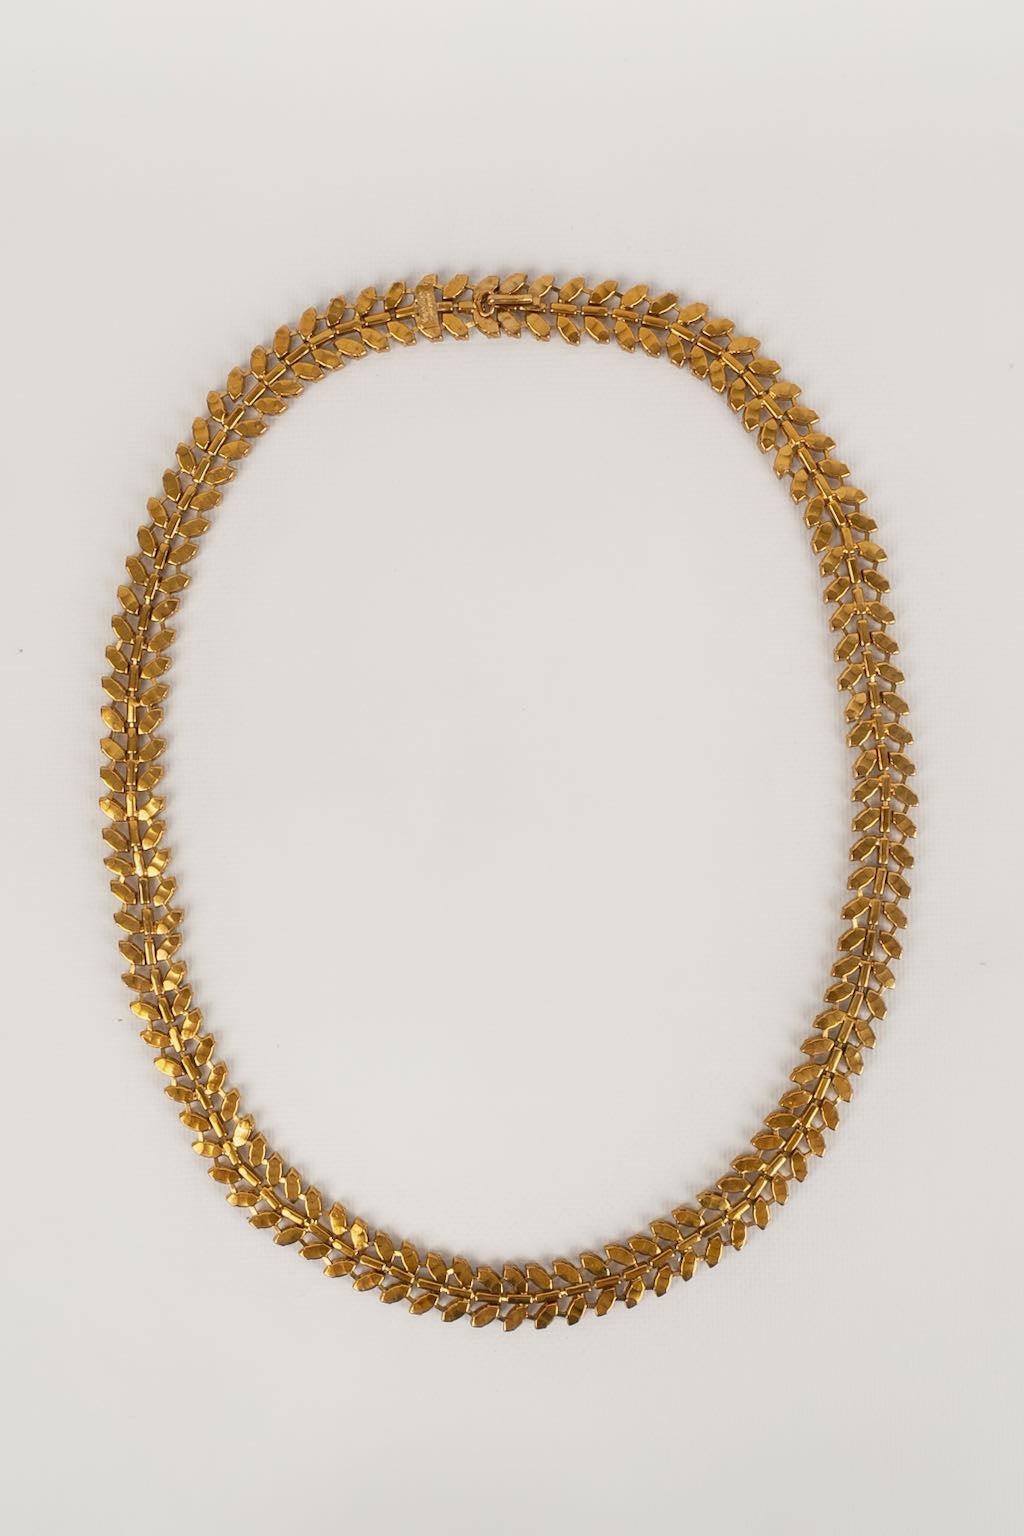 Yves Saint Laurent Golden Metal Necklace For Sale 1